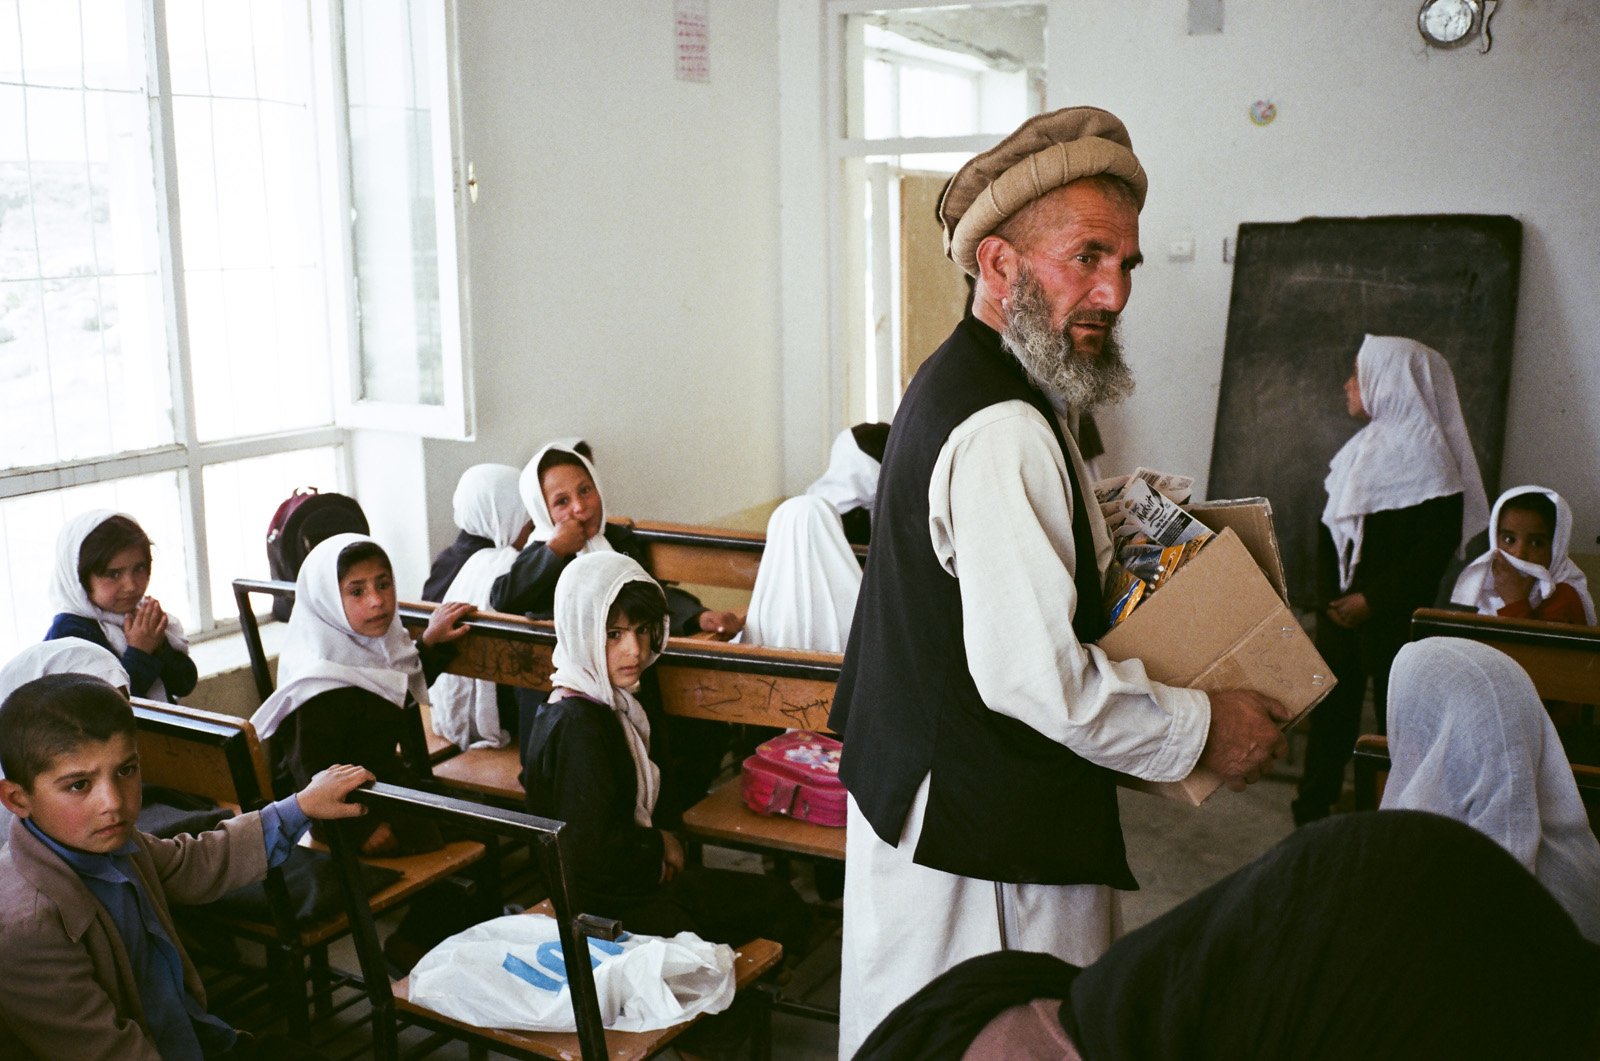 Photo extraite du projet "Yearbook Afghanistan" / © Ruvan Wijesooriya 